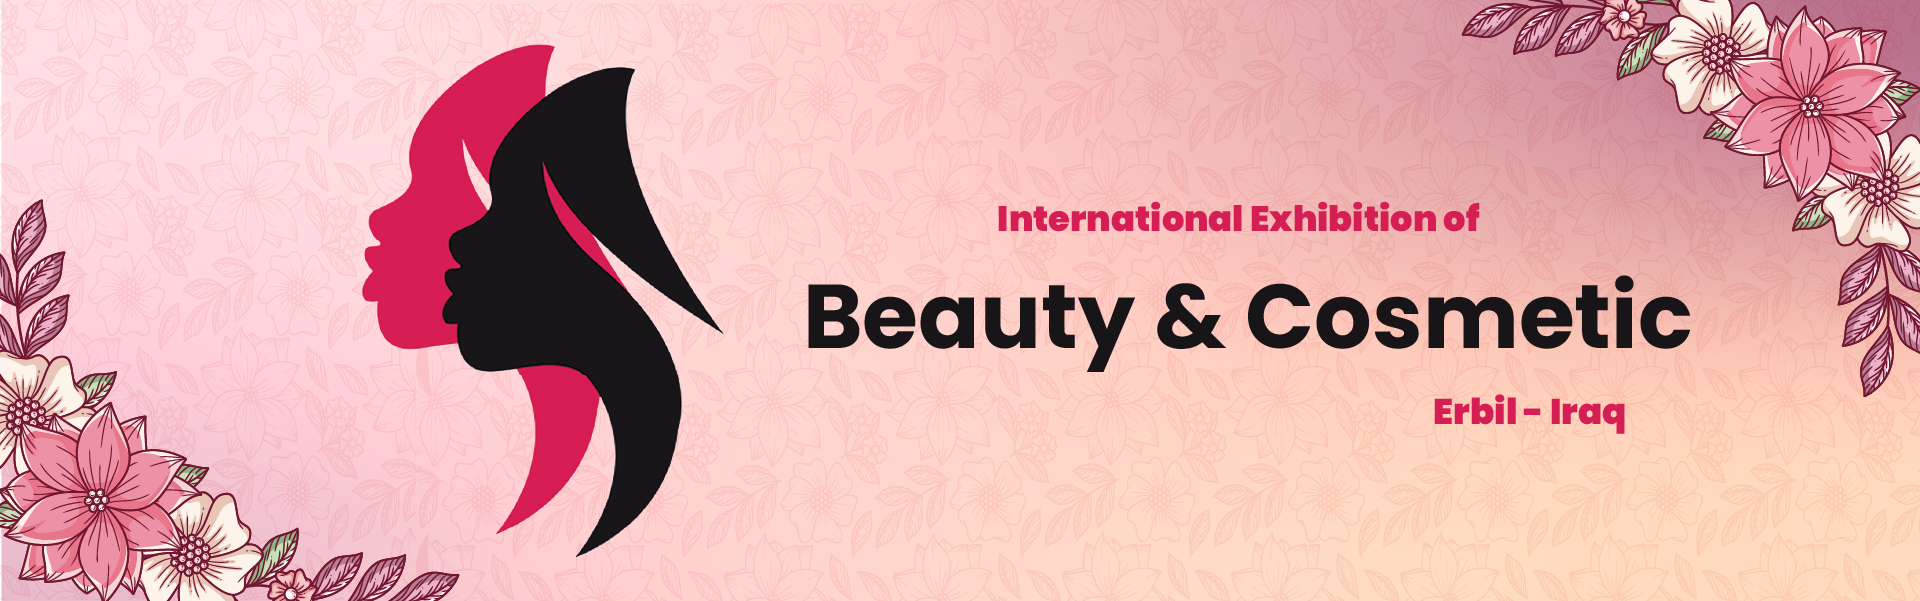 Beauty & Cosmetic Exhibition Iraq Erbil